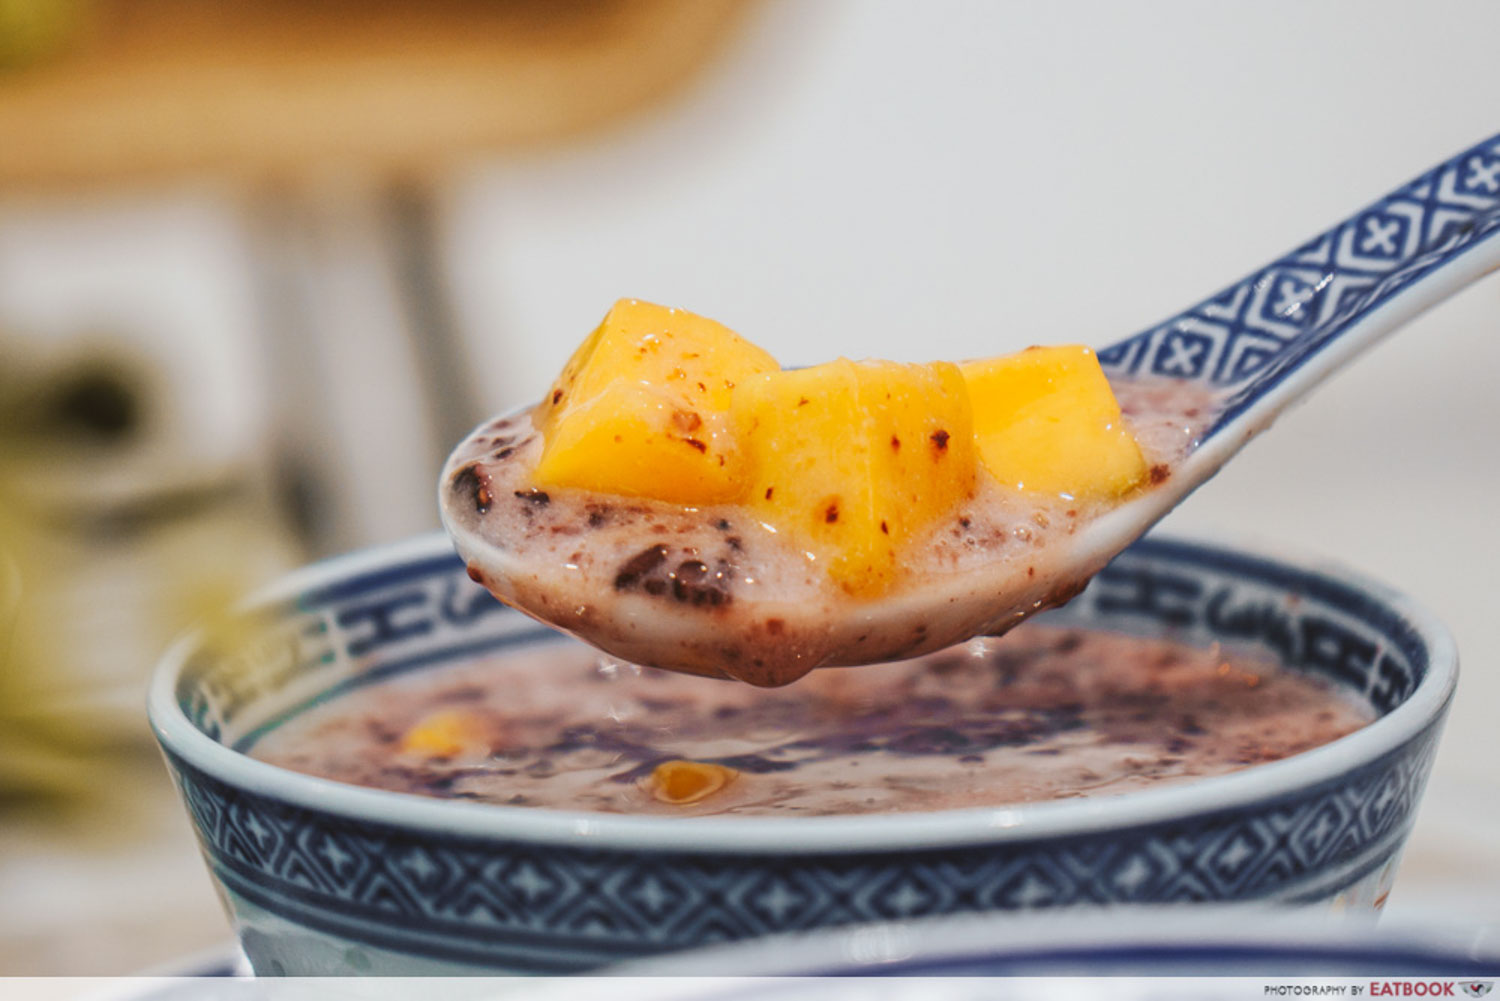 Jin Yu Man Tang Dessert Shop - Diced Mango Closeup